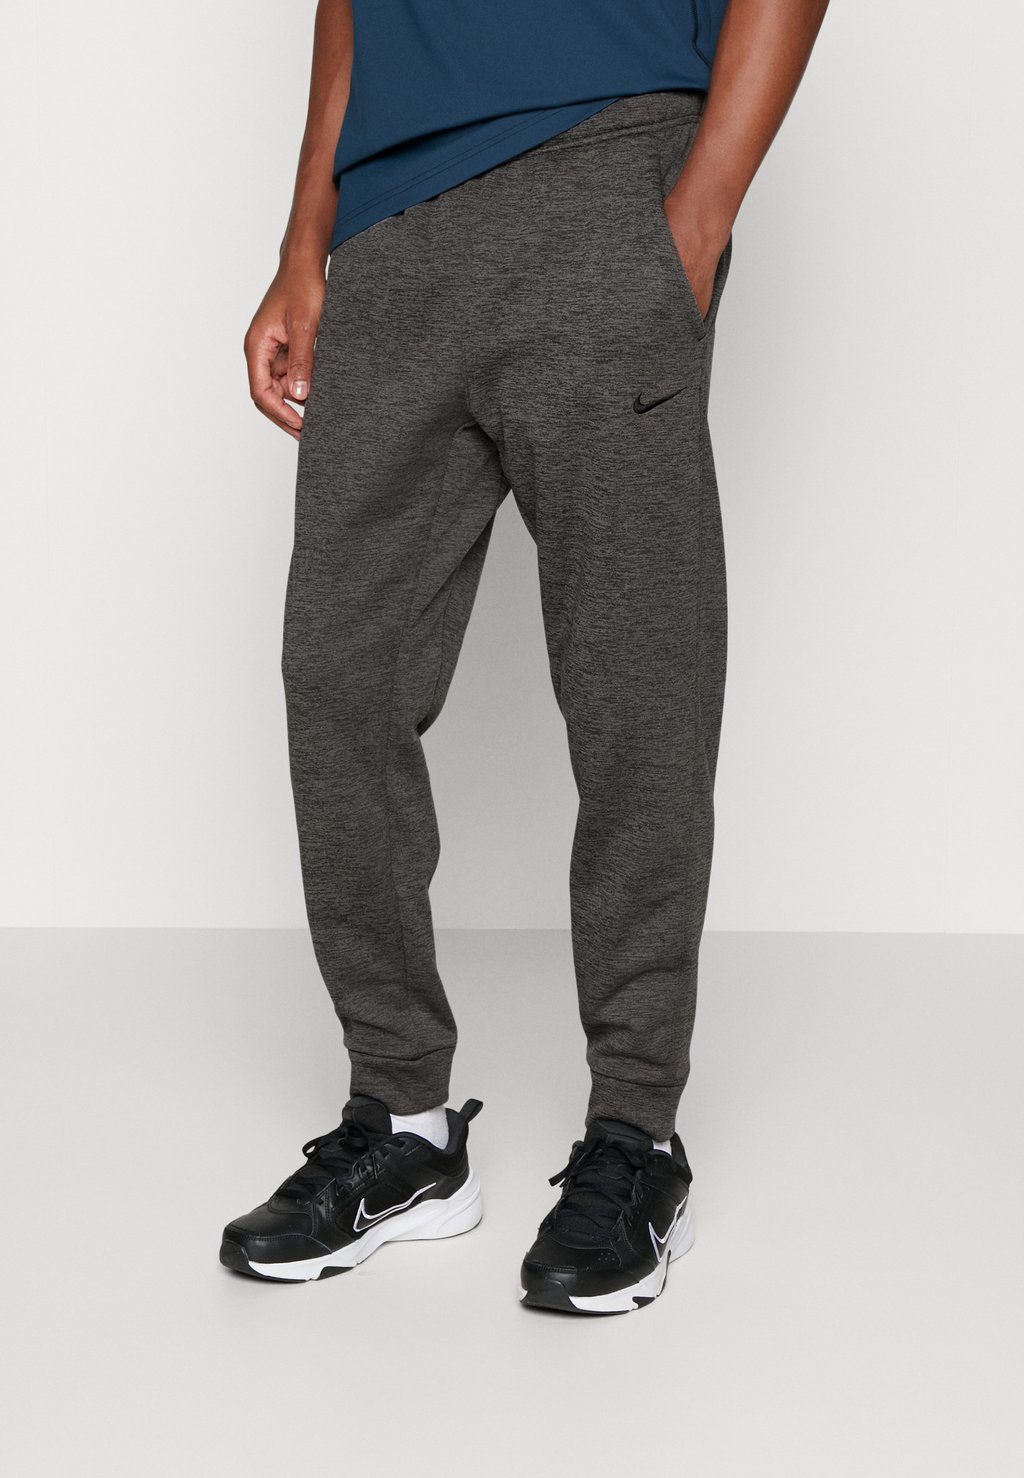 Спортивные брюки PANT TAPER Nike, темно-серый/темно-дымчато-серый/черный спортивные брюки pant taper nike черный белый